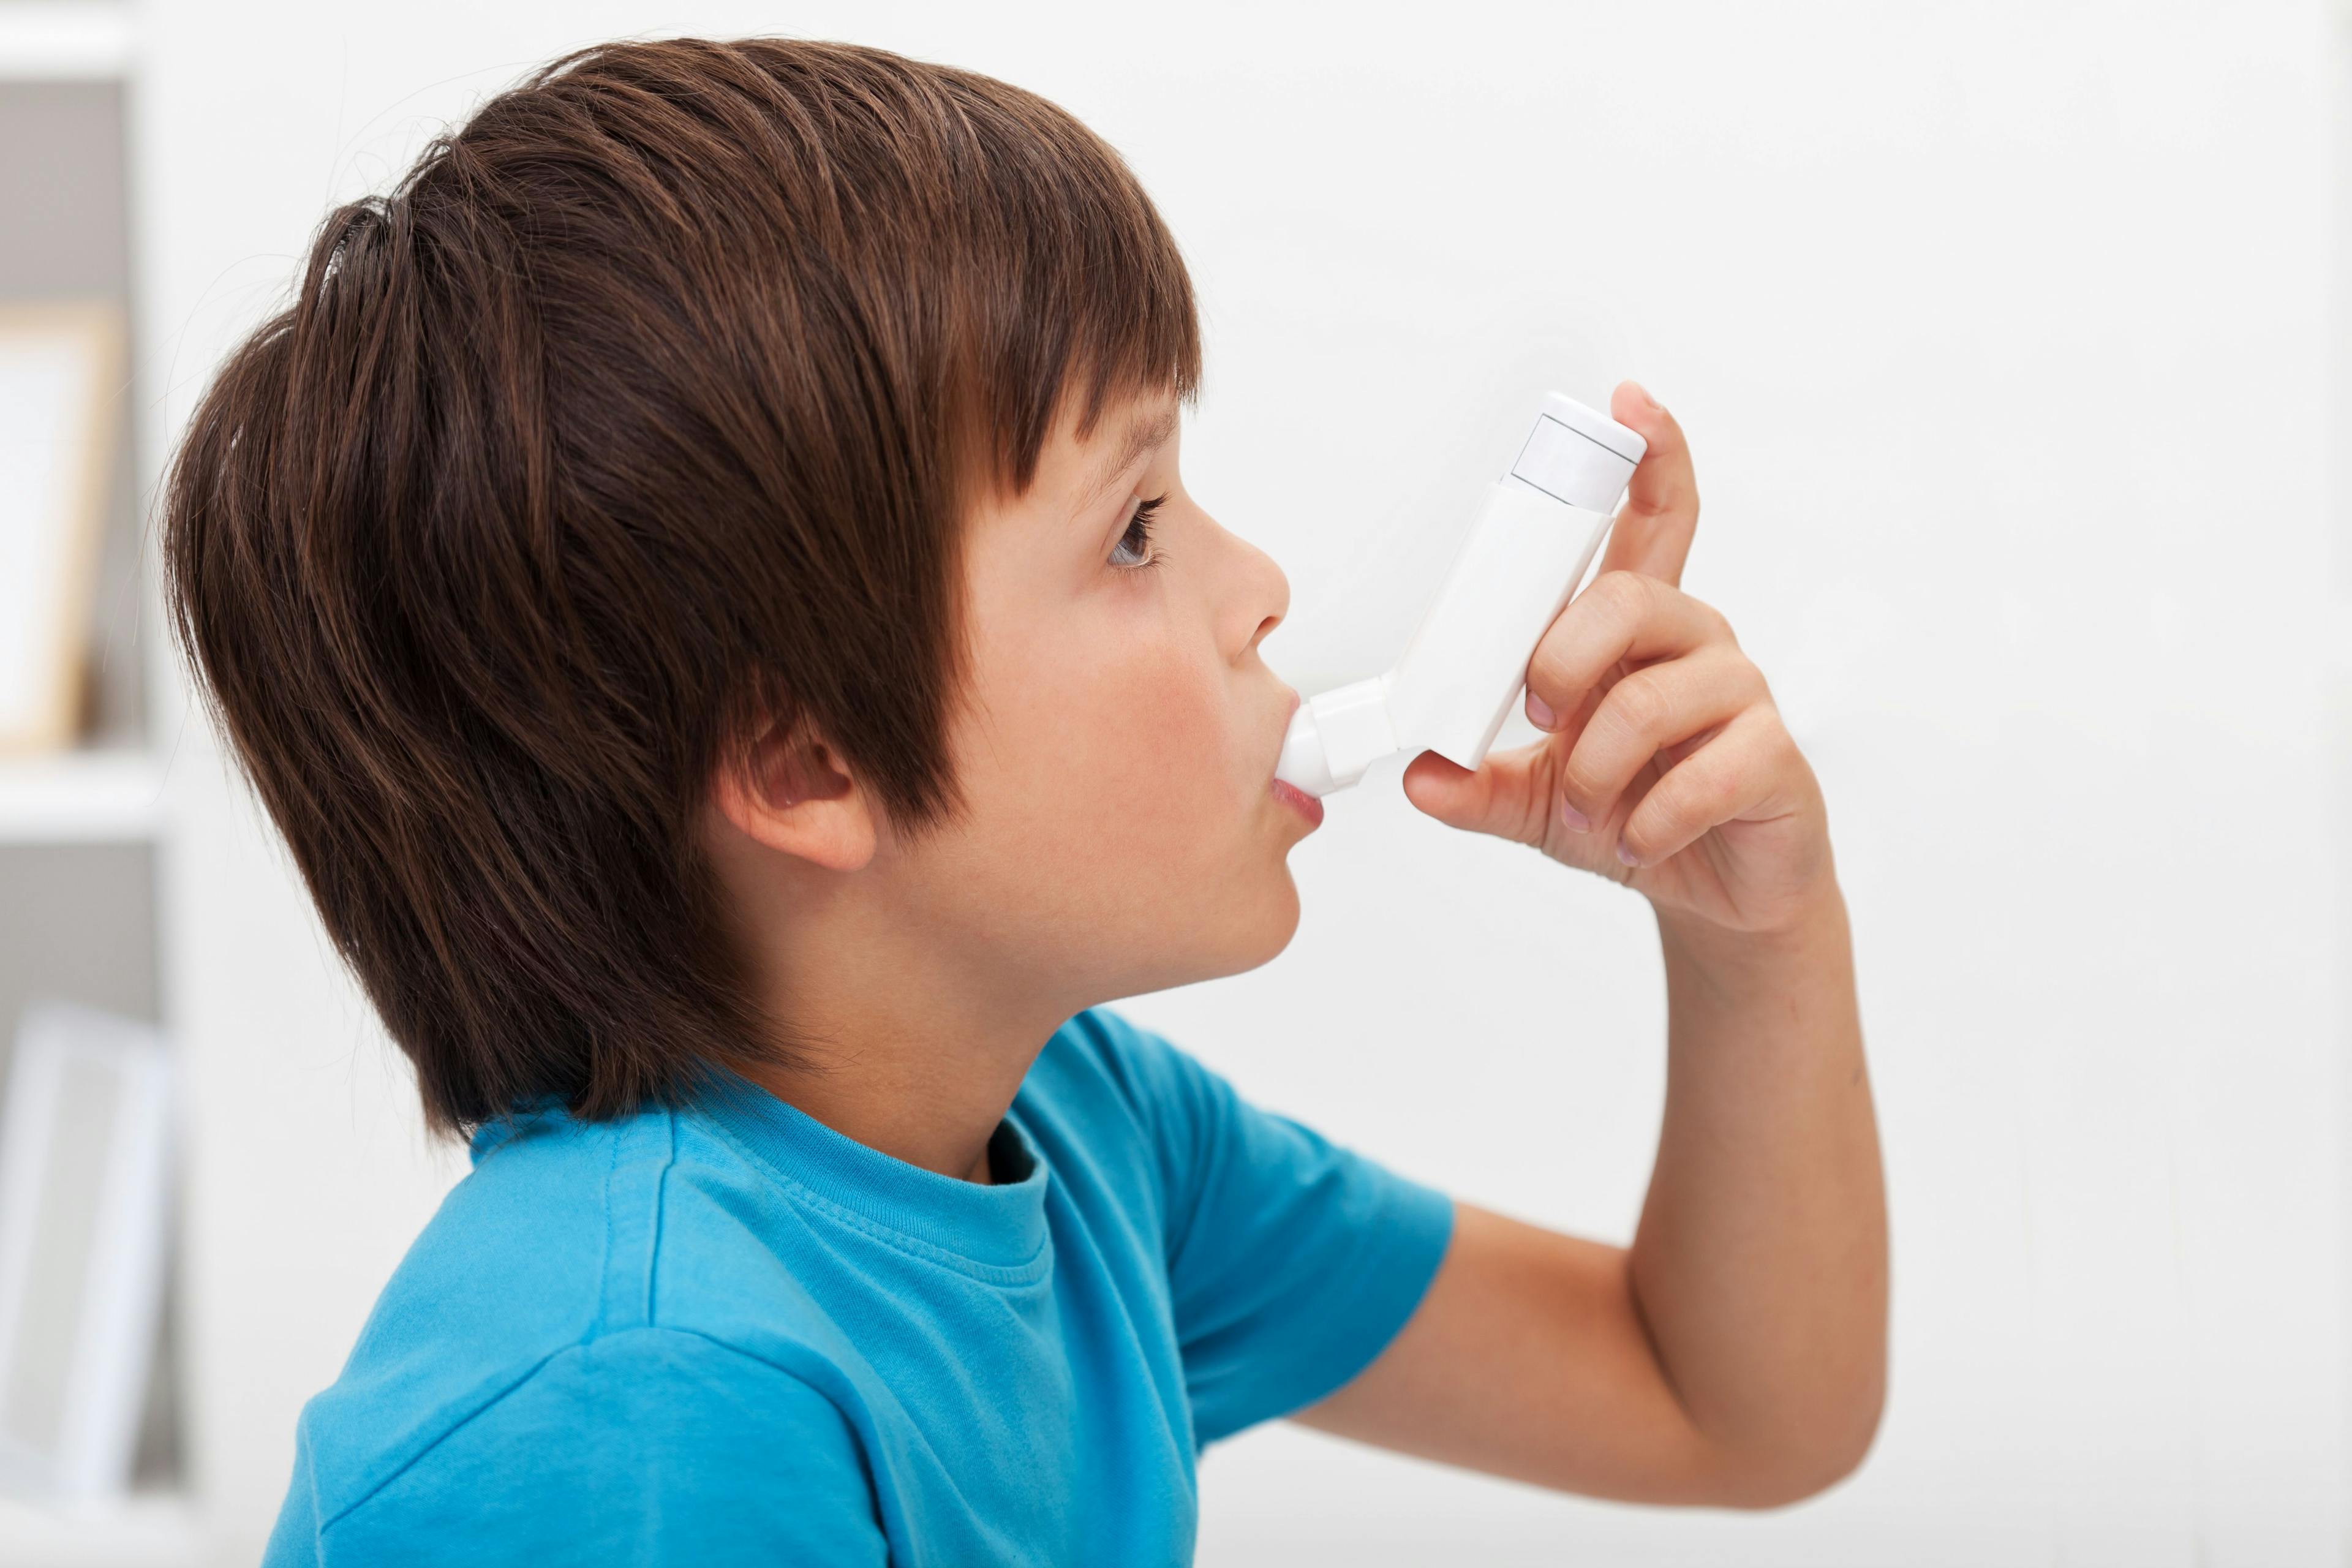 asthma child